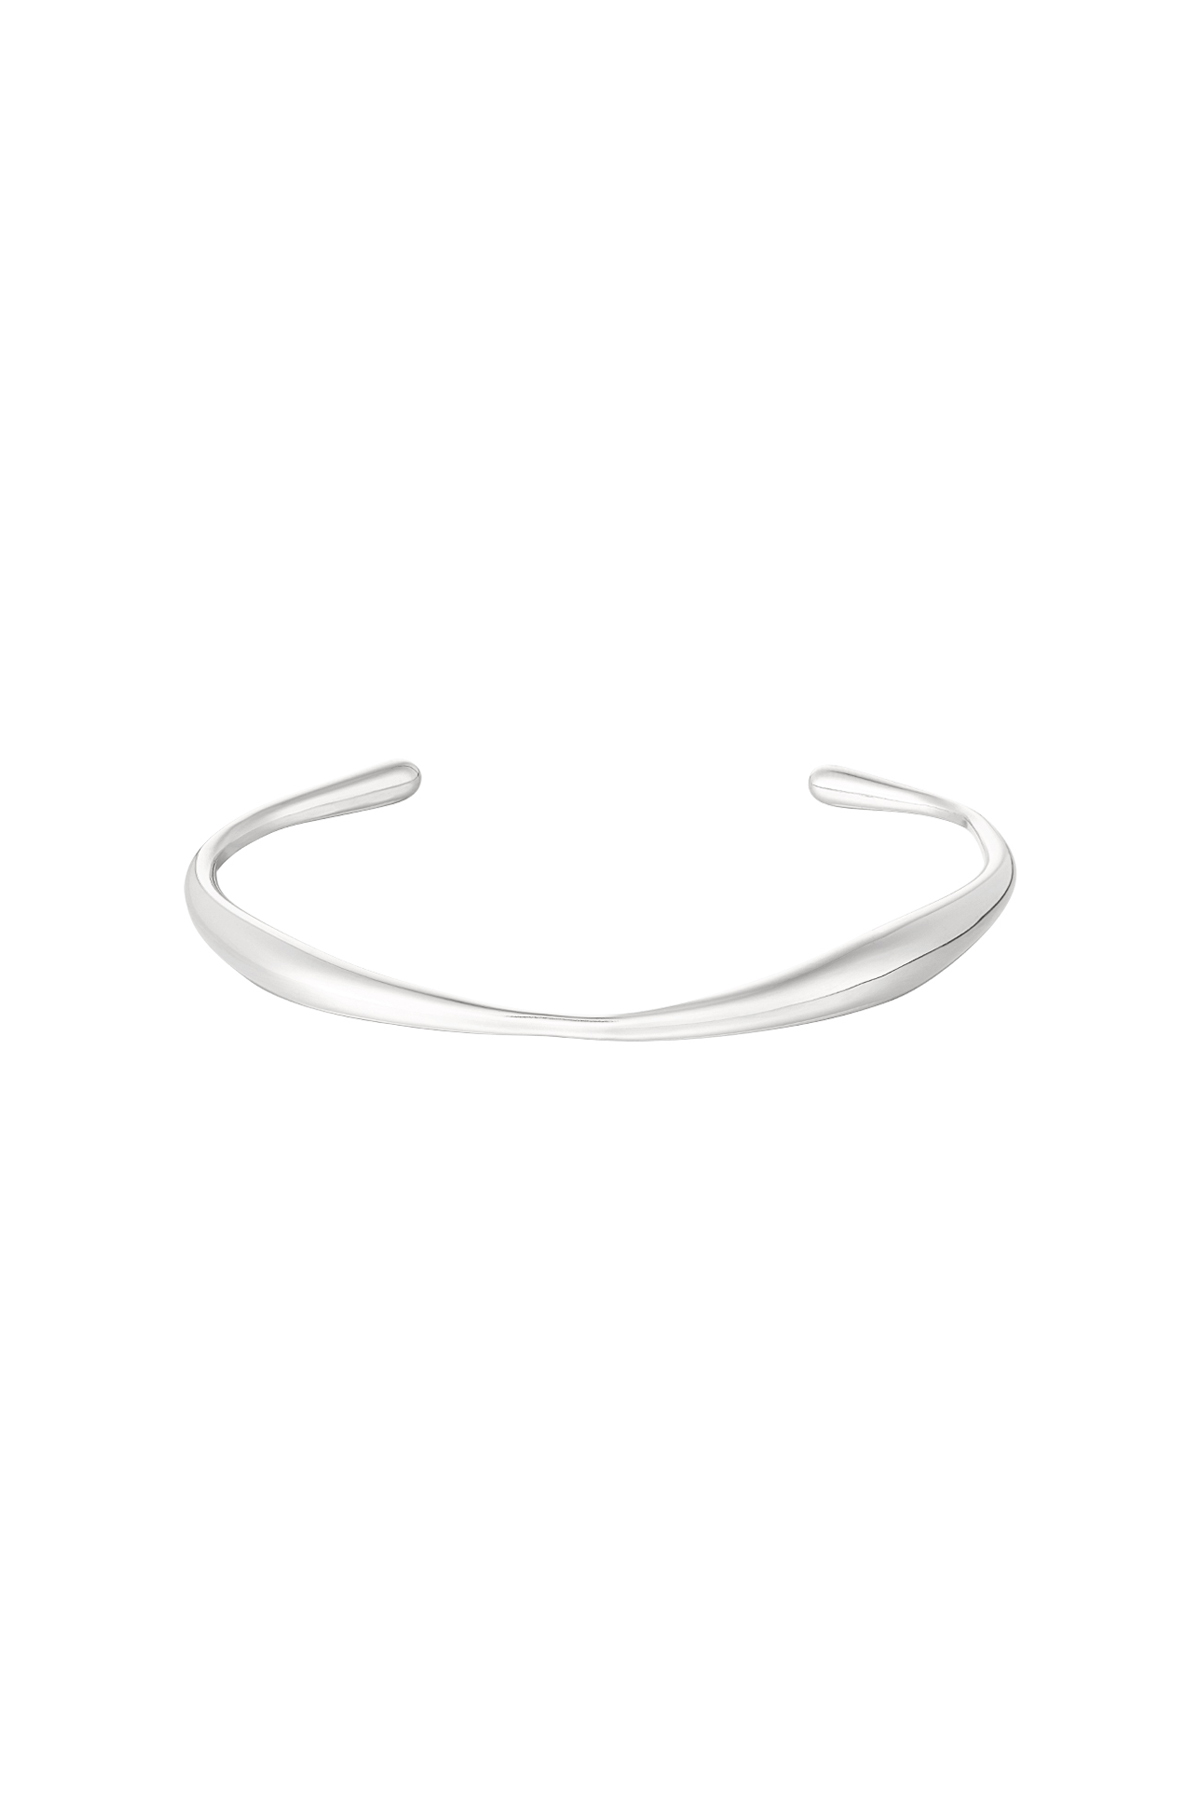 Organic shape bracelet - silver h5 